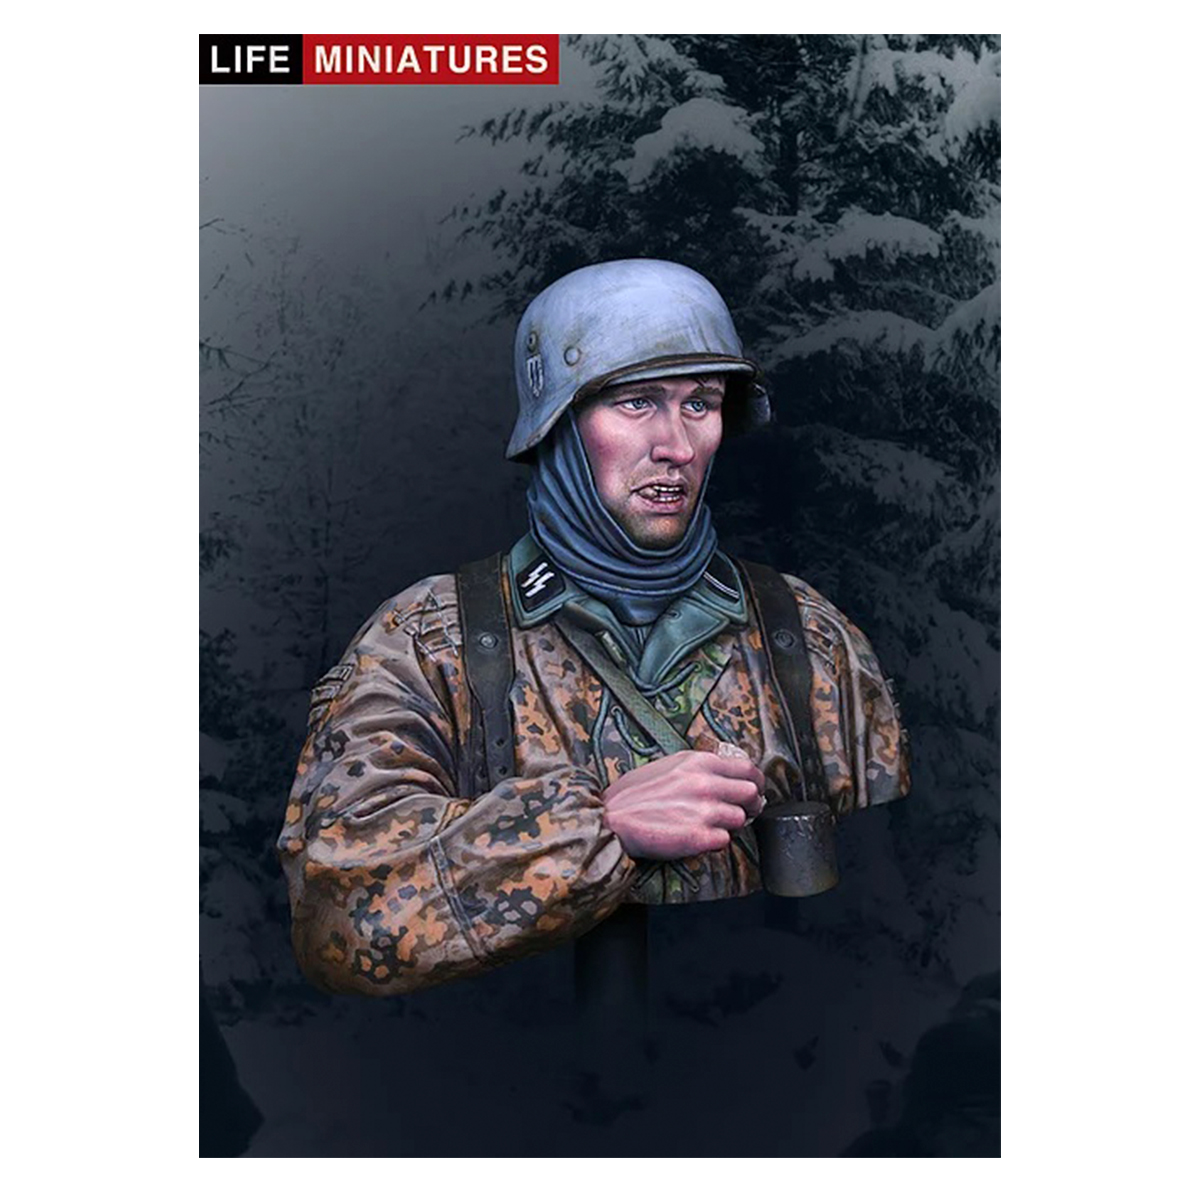 Life Miniatures – Waffen-SS Infantryman, Ardennes 1944 – 1/10 bust